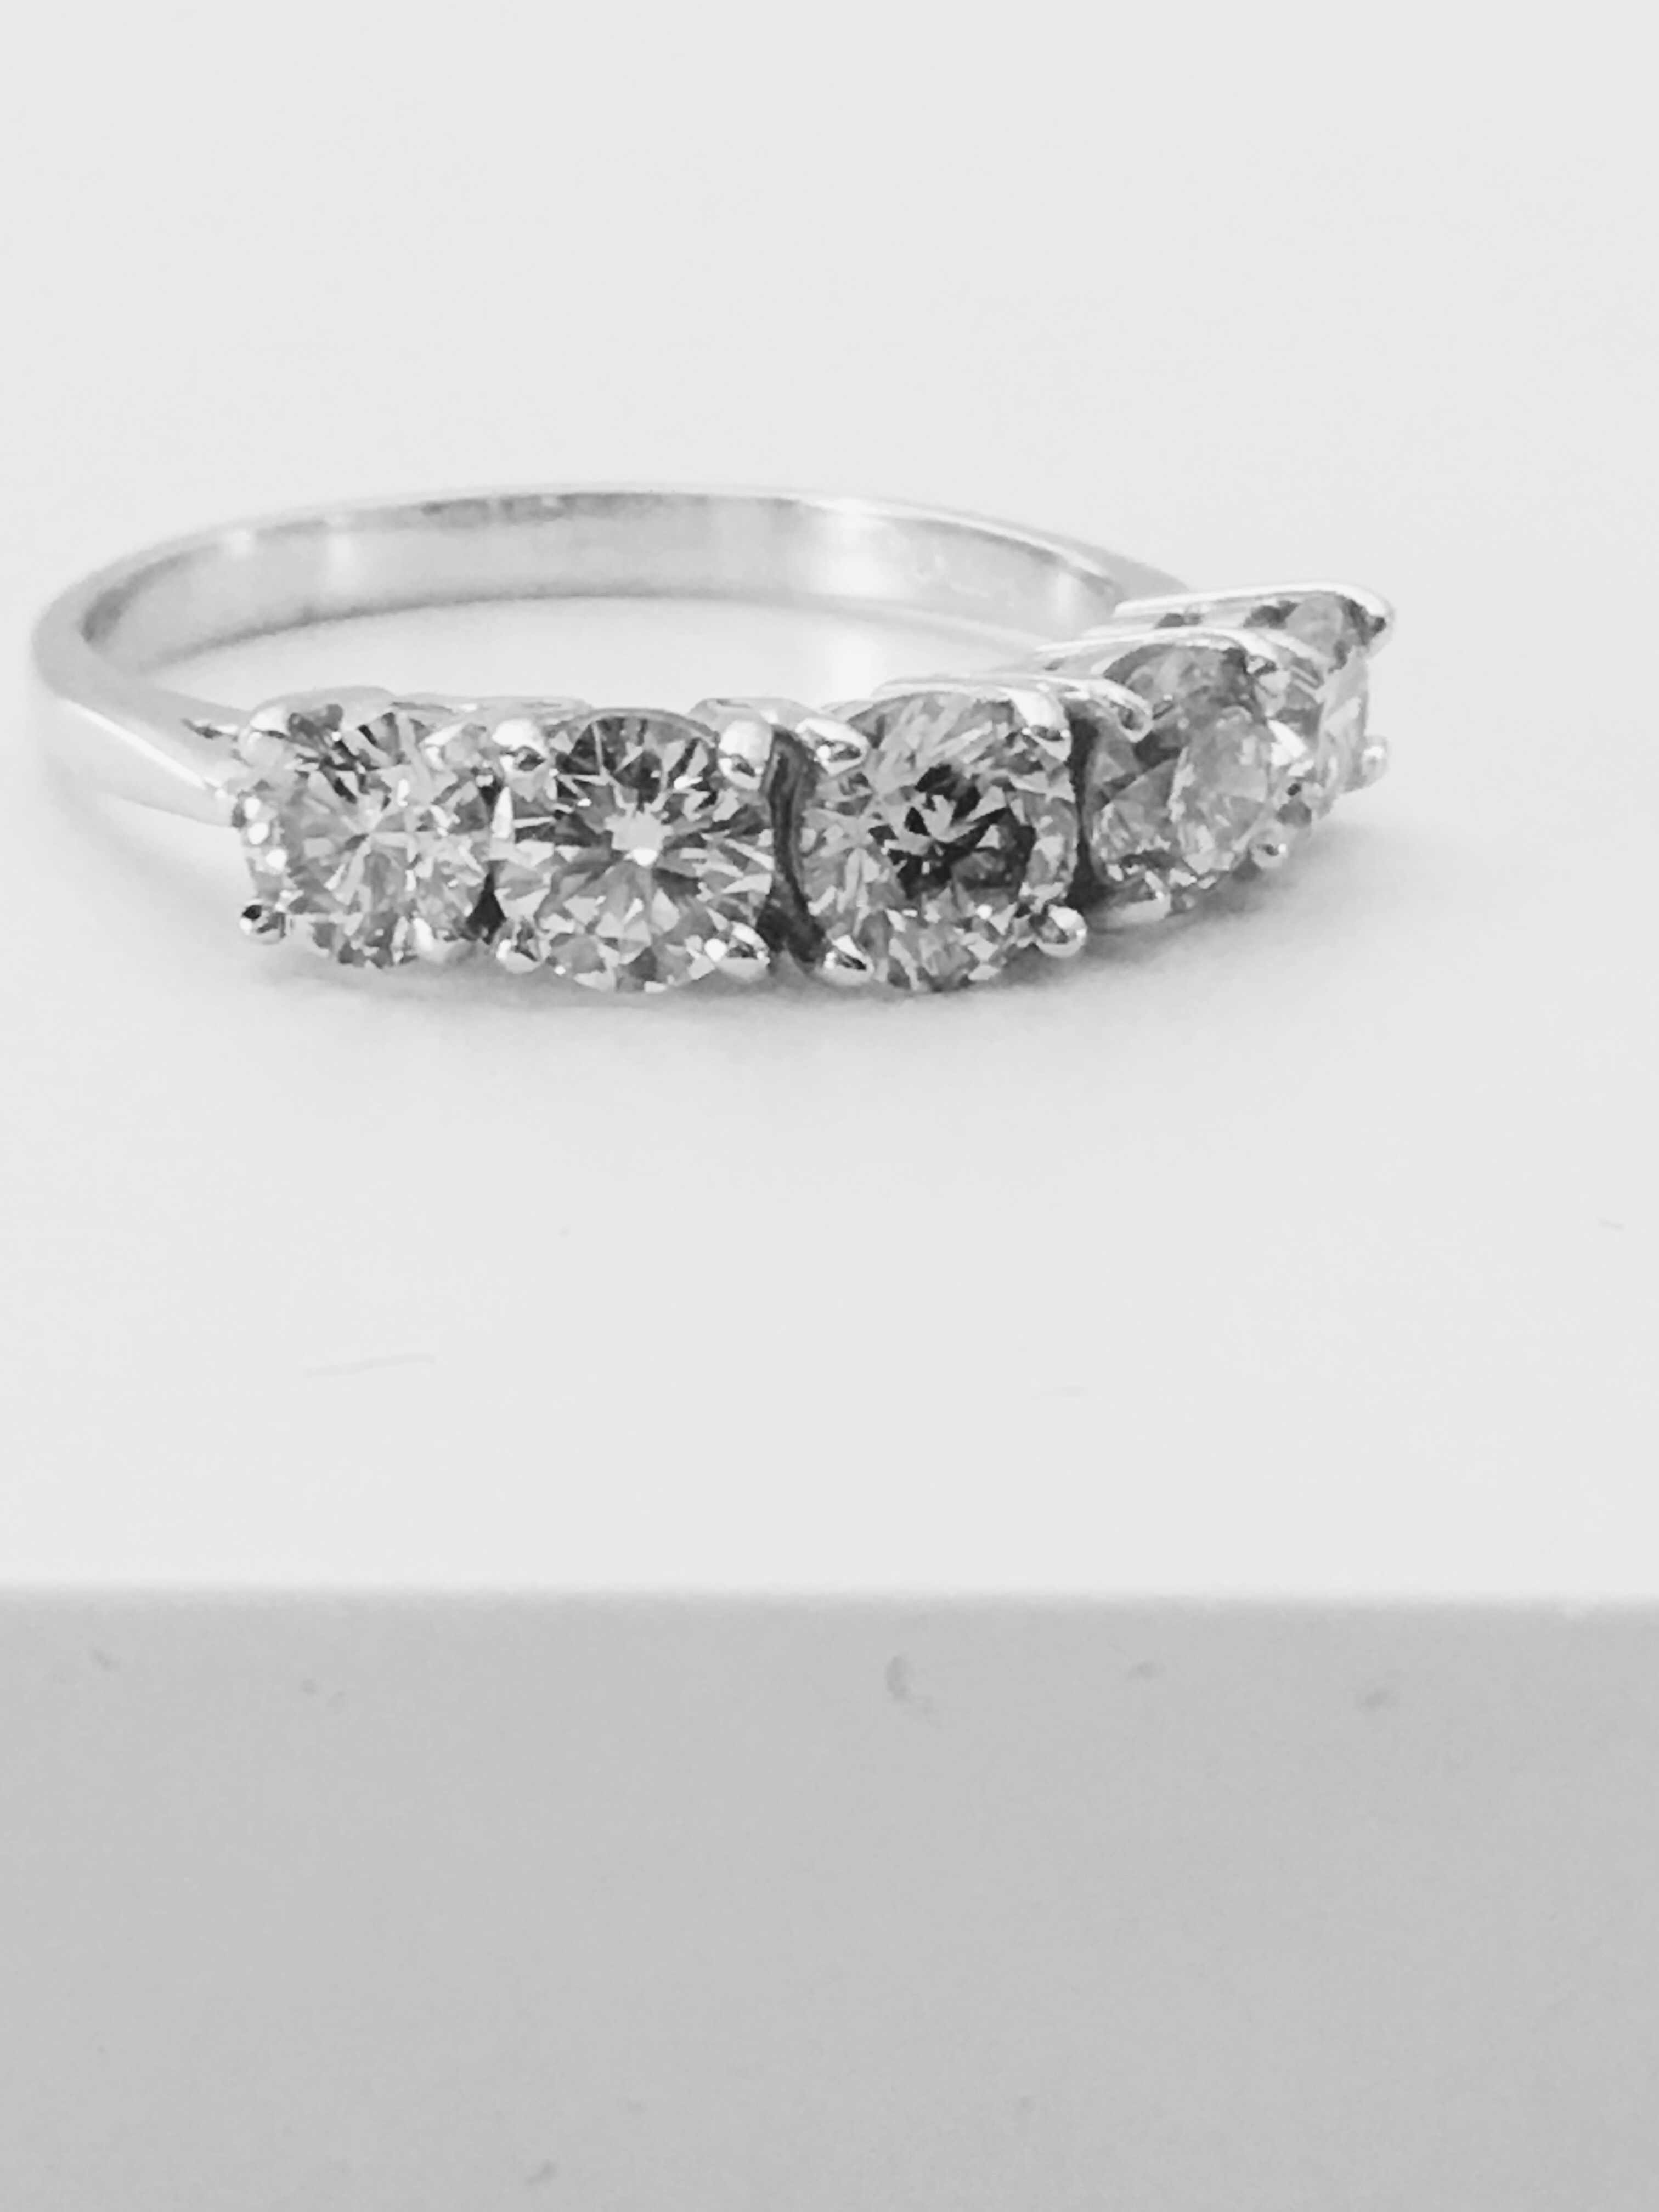 2.10ct diamon dfive stone Ring set in Platinum - Image 7 of 7